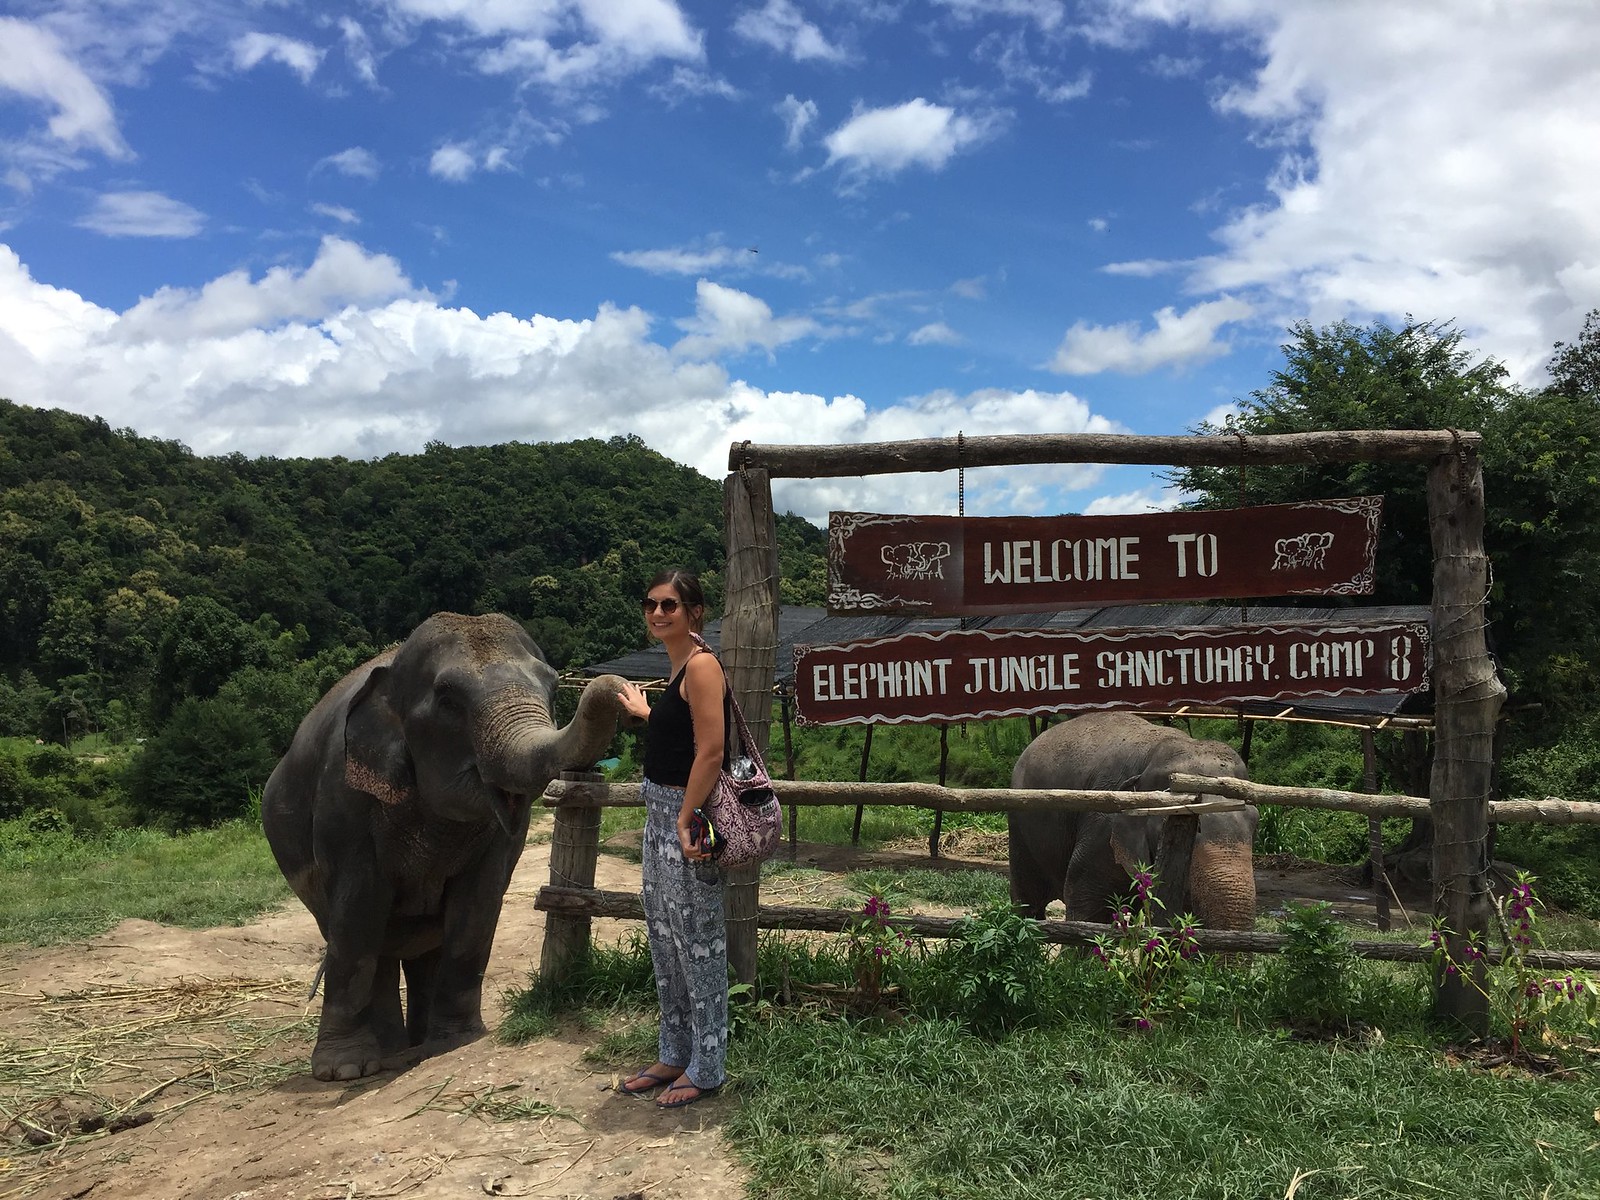 At the Elephant Jungle Sanctuary